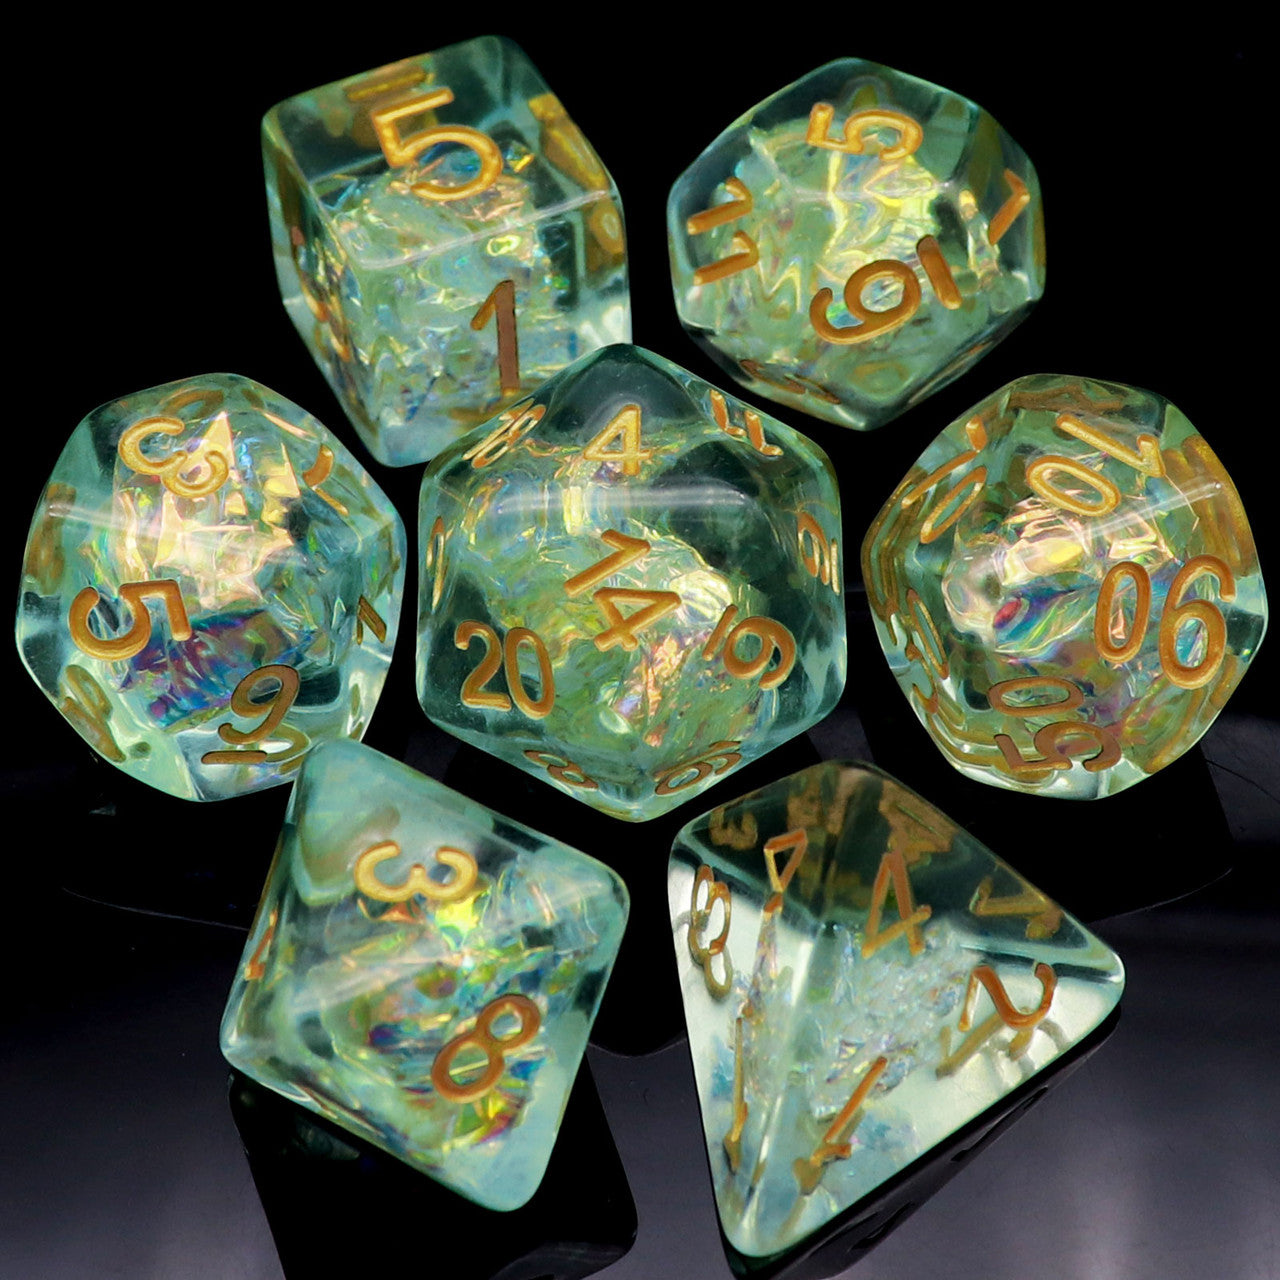 Iridescent dice, green dice